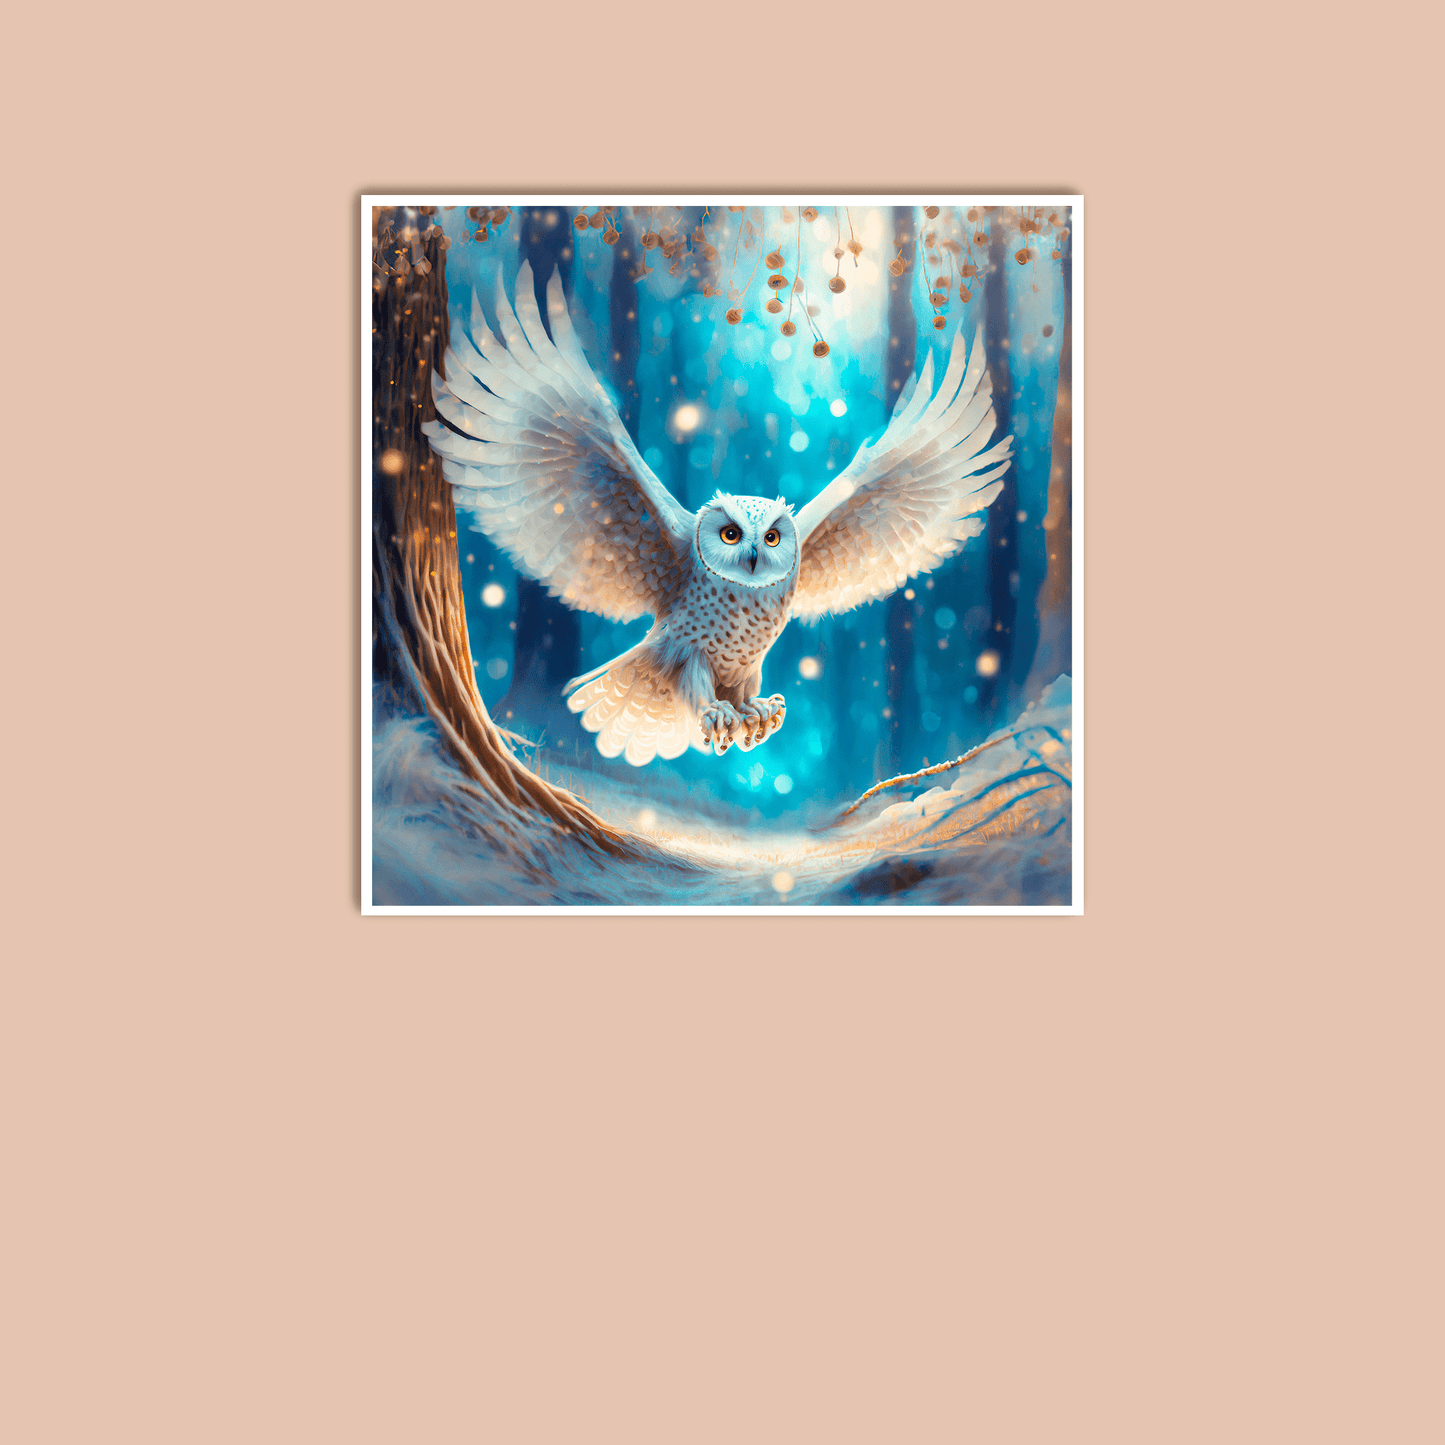 Snow Owl in Flight - Art Print - Unframed - Premium Archival Matte Fine Art Paper